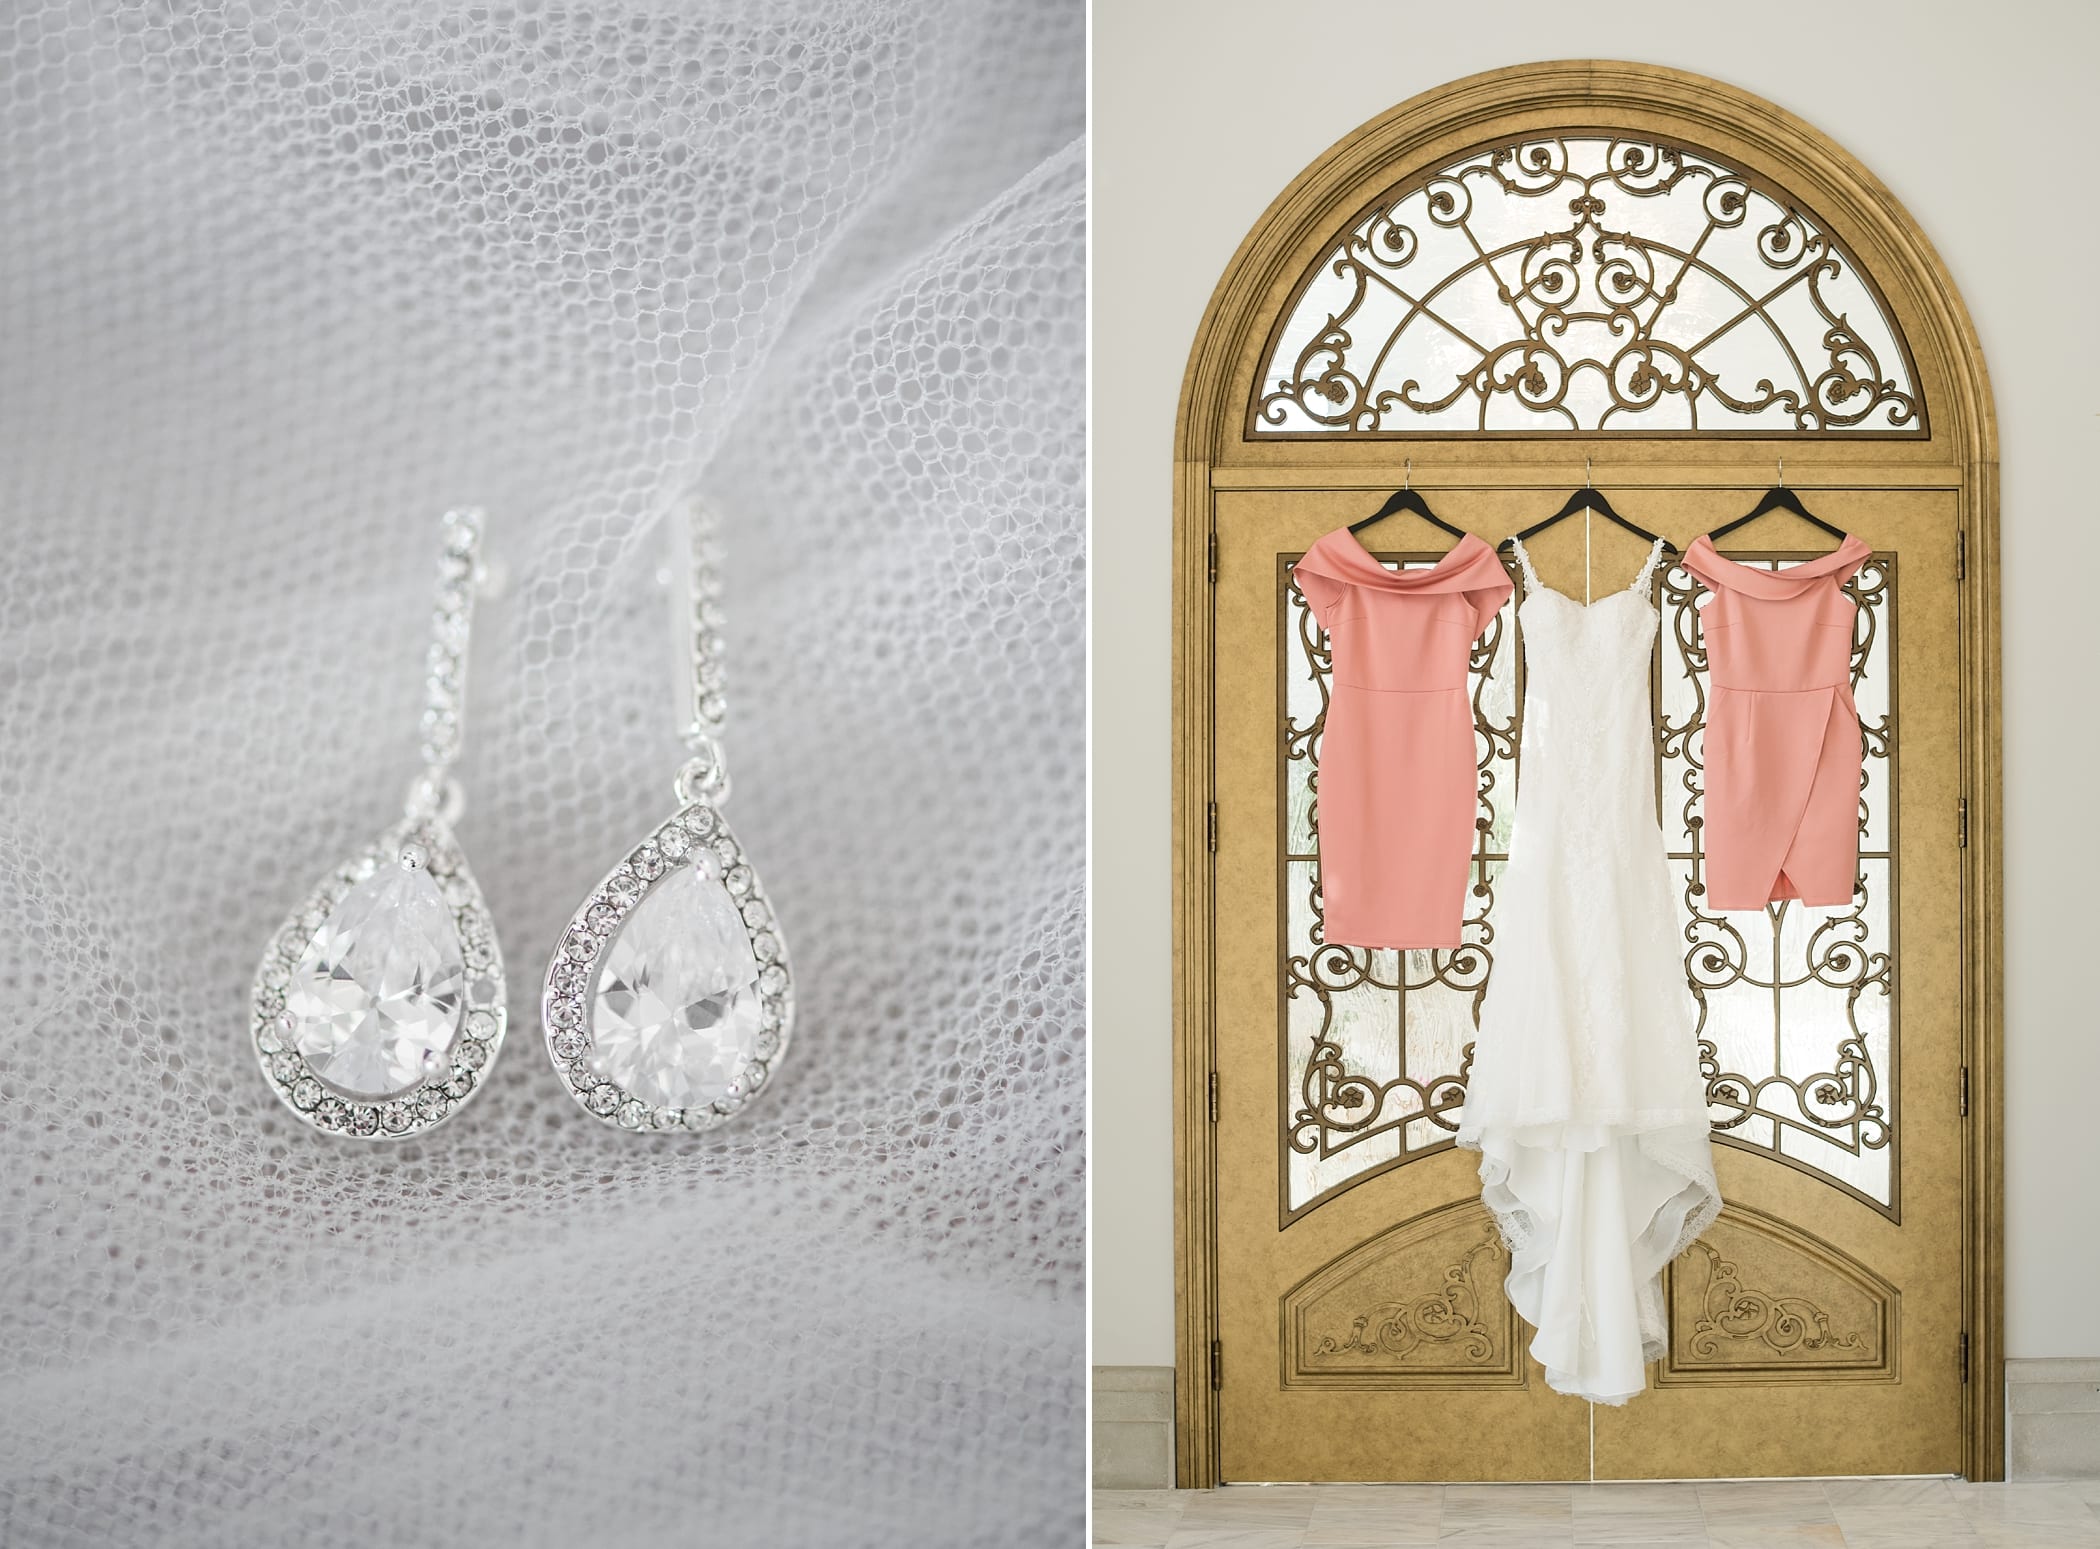 Bridal Wedding Day Details at the Chateau des Fleurs by Michelle & Logan